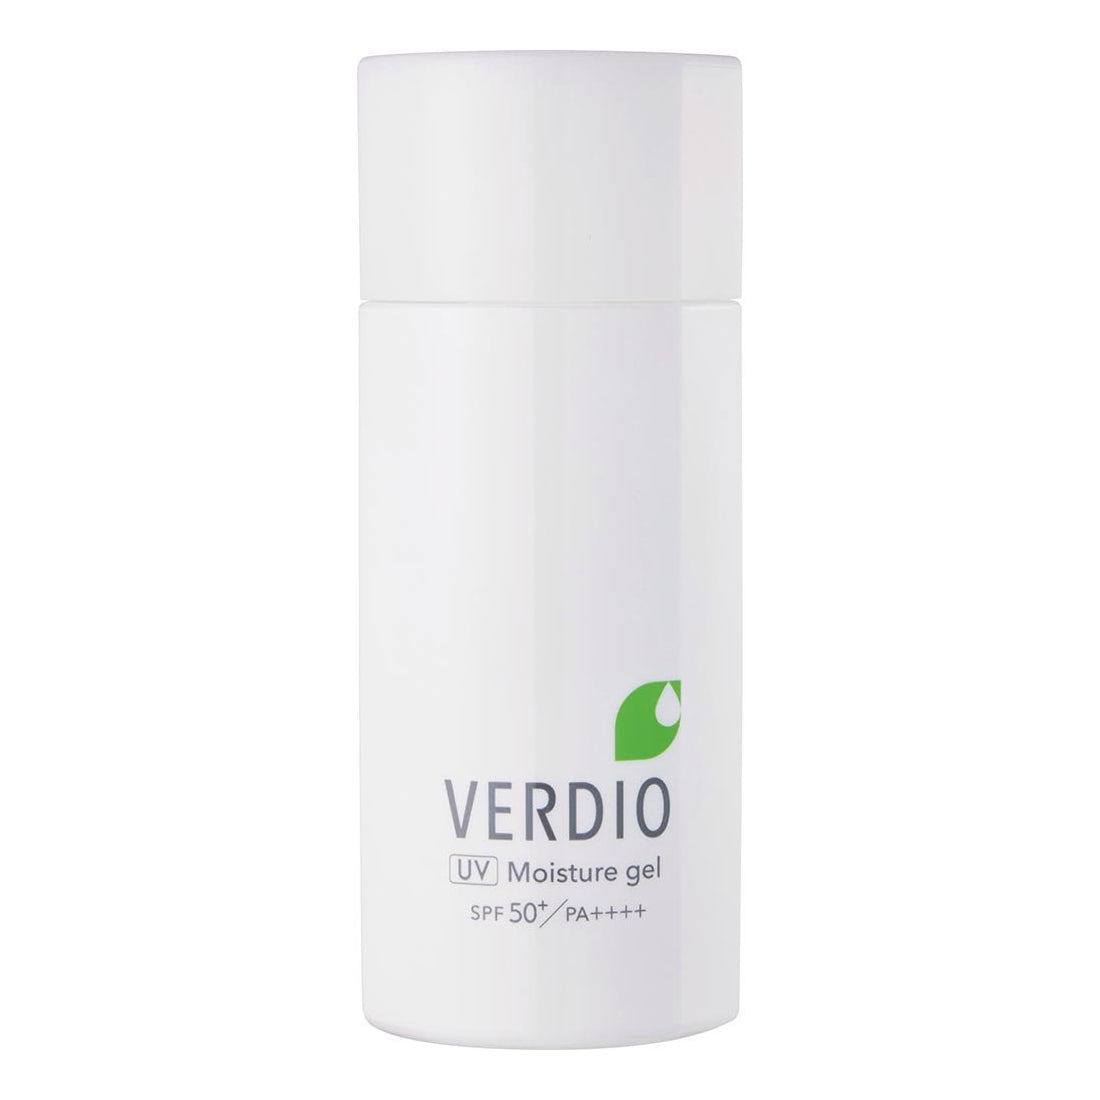 Verdio UV Moisture Gel SPF 50+ PA++++ Sunscreen Omi   